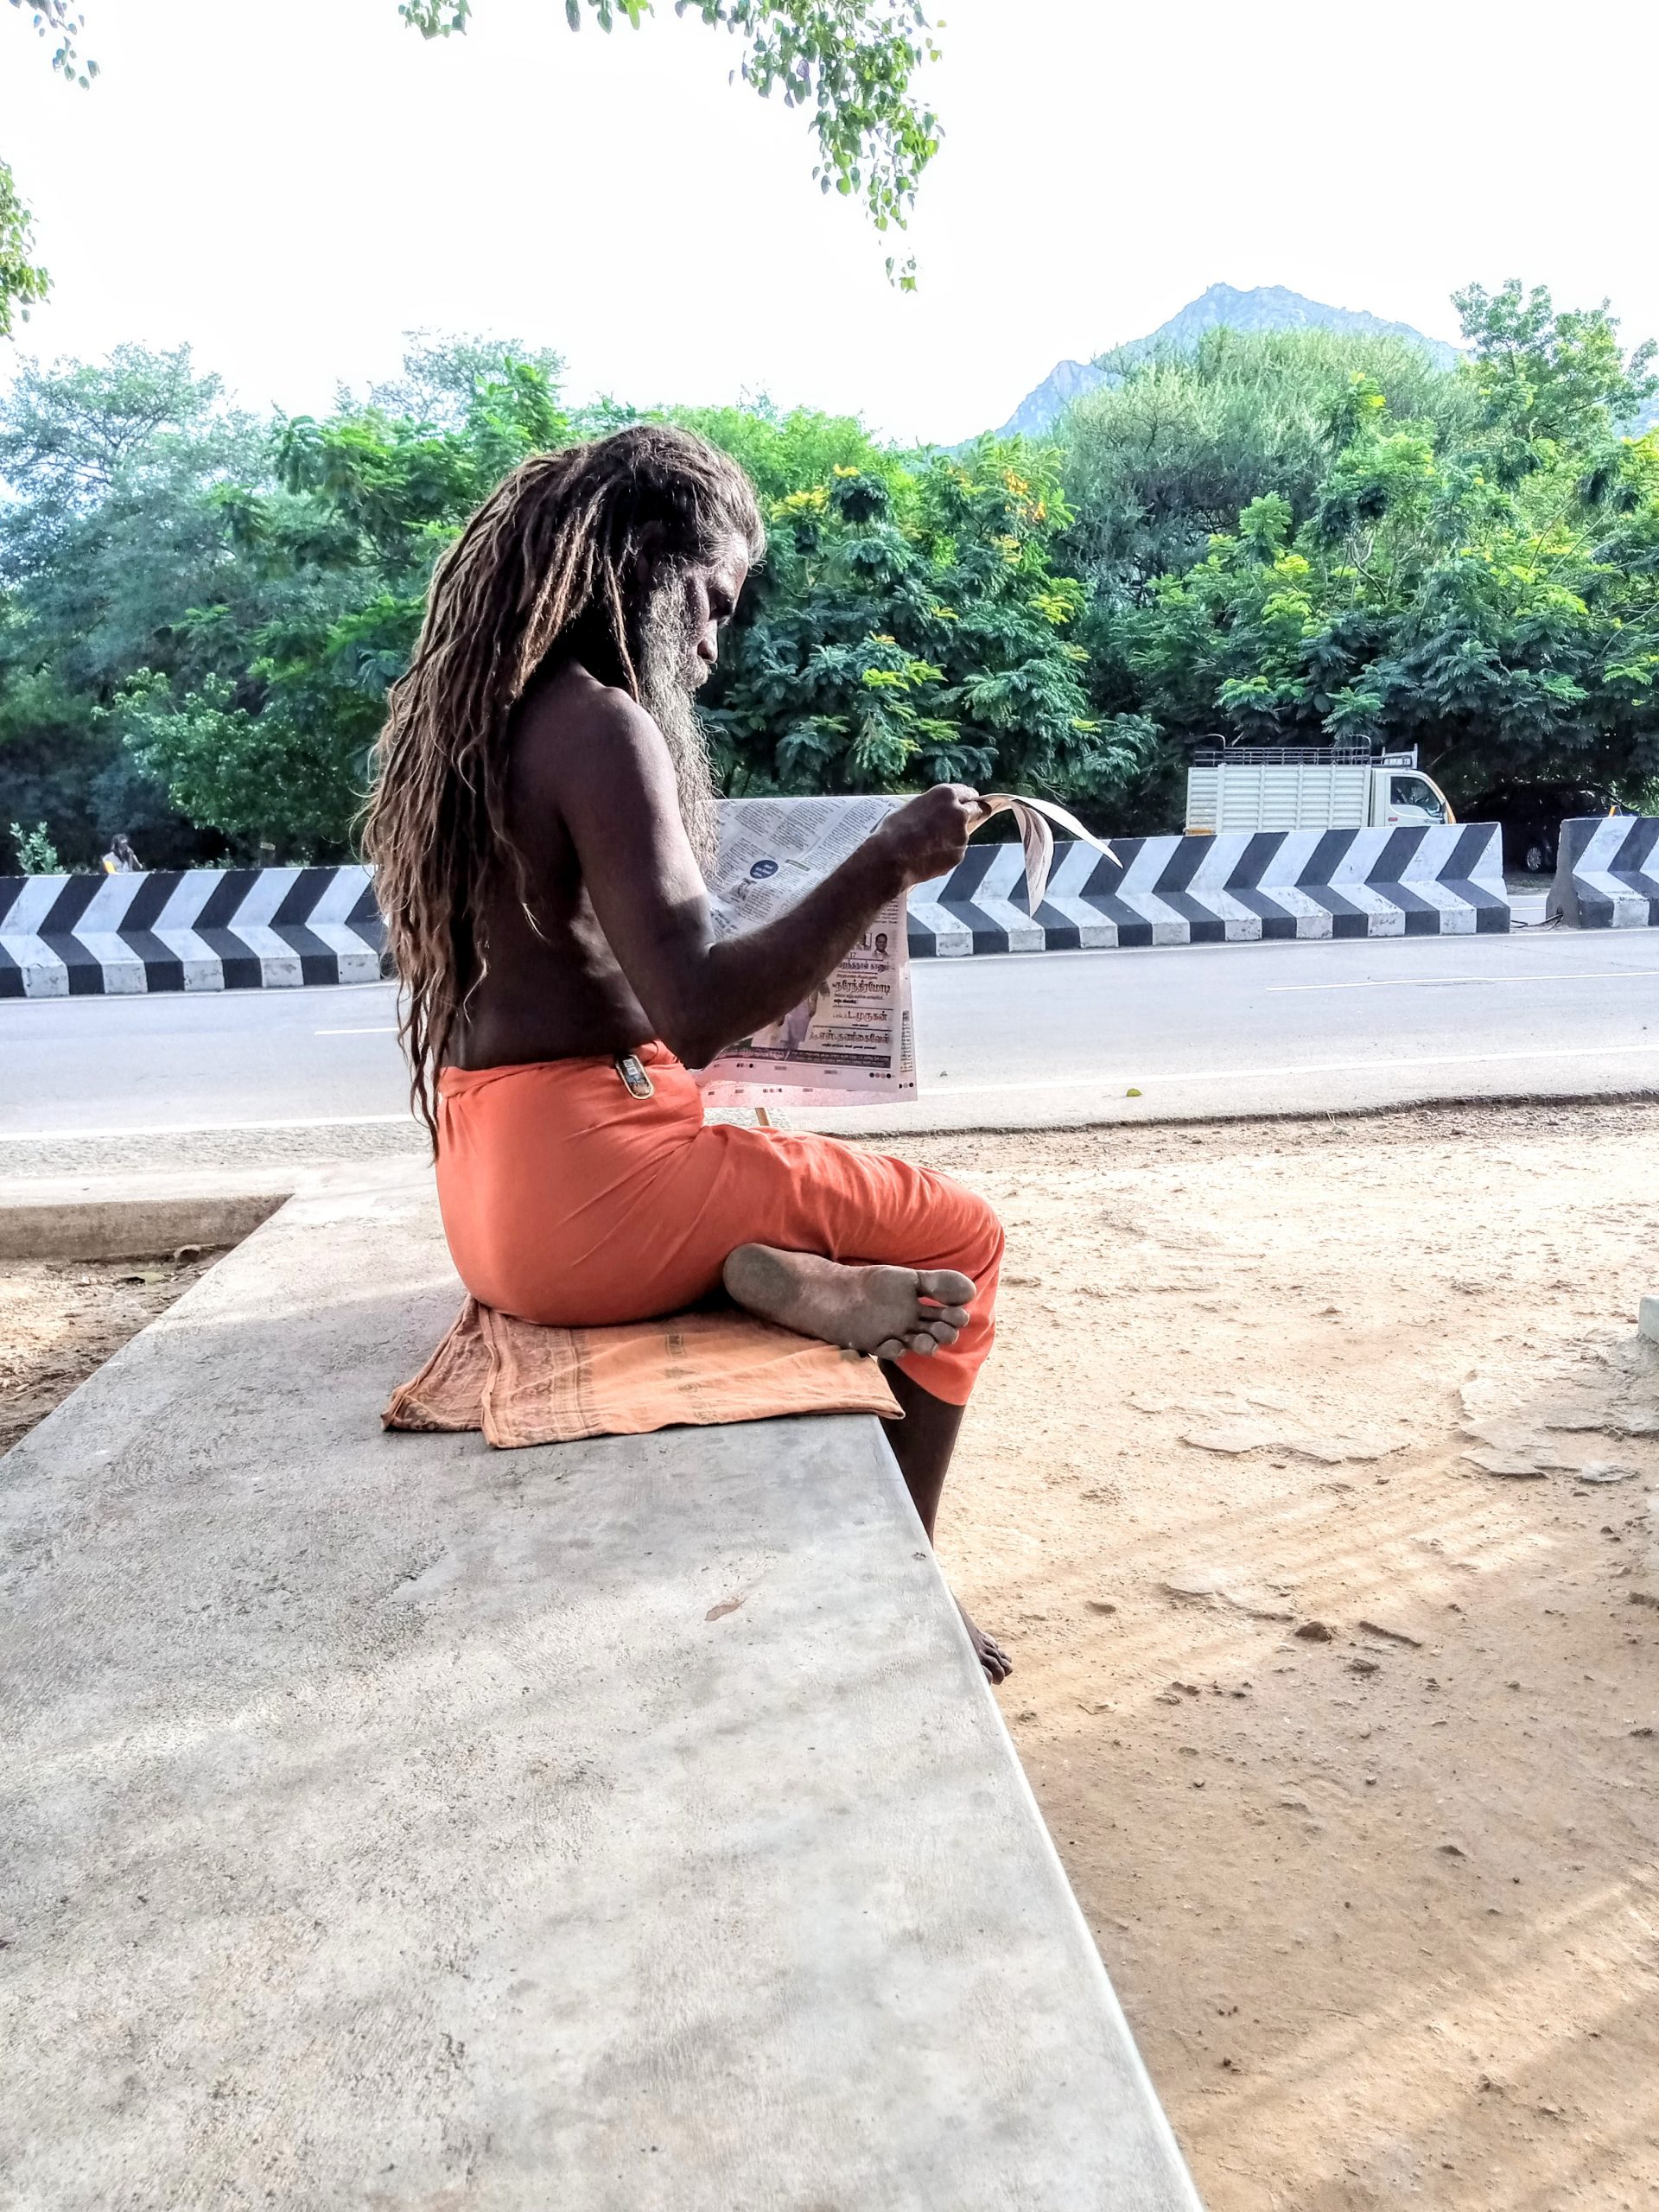 A sadhu reading newspaper.